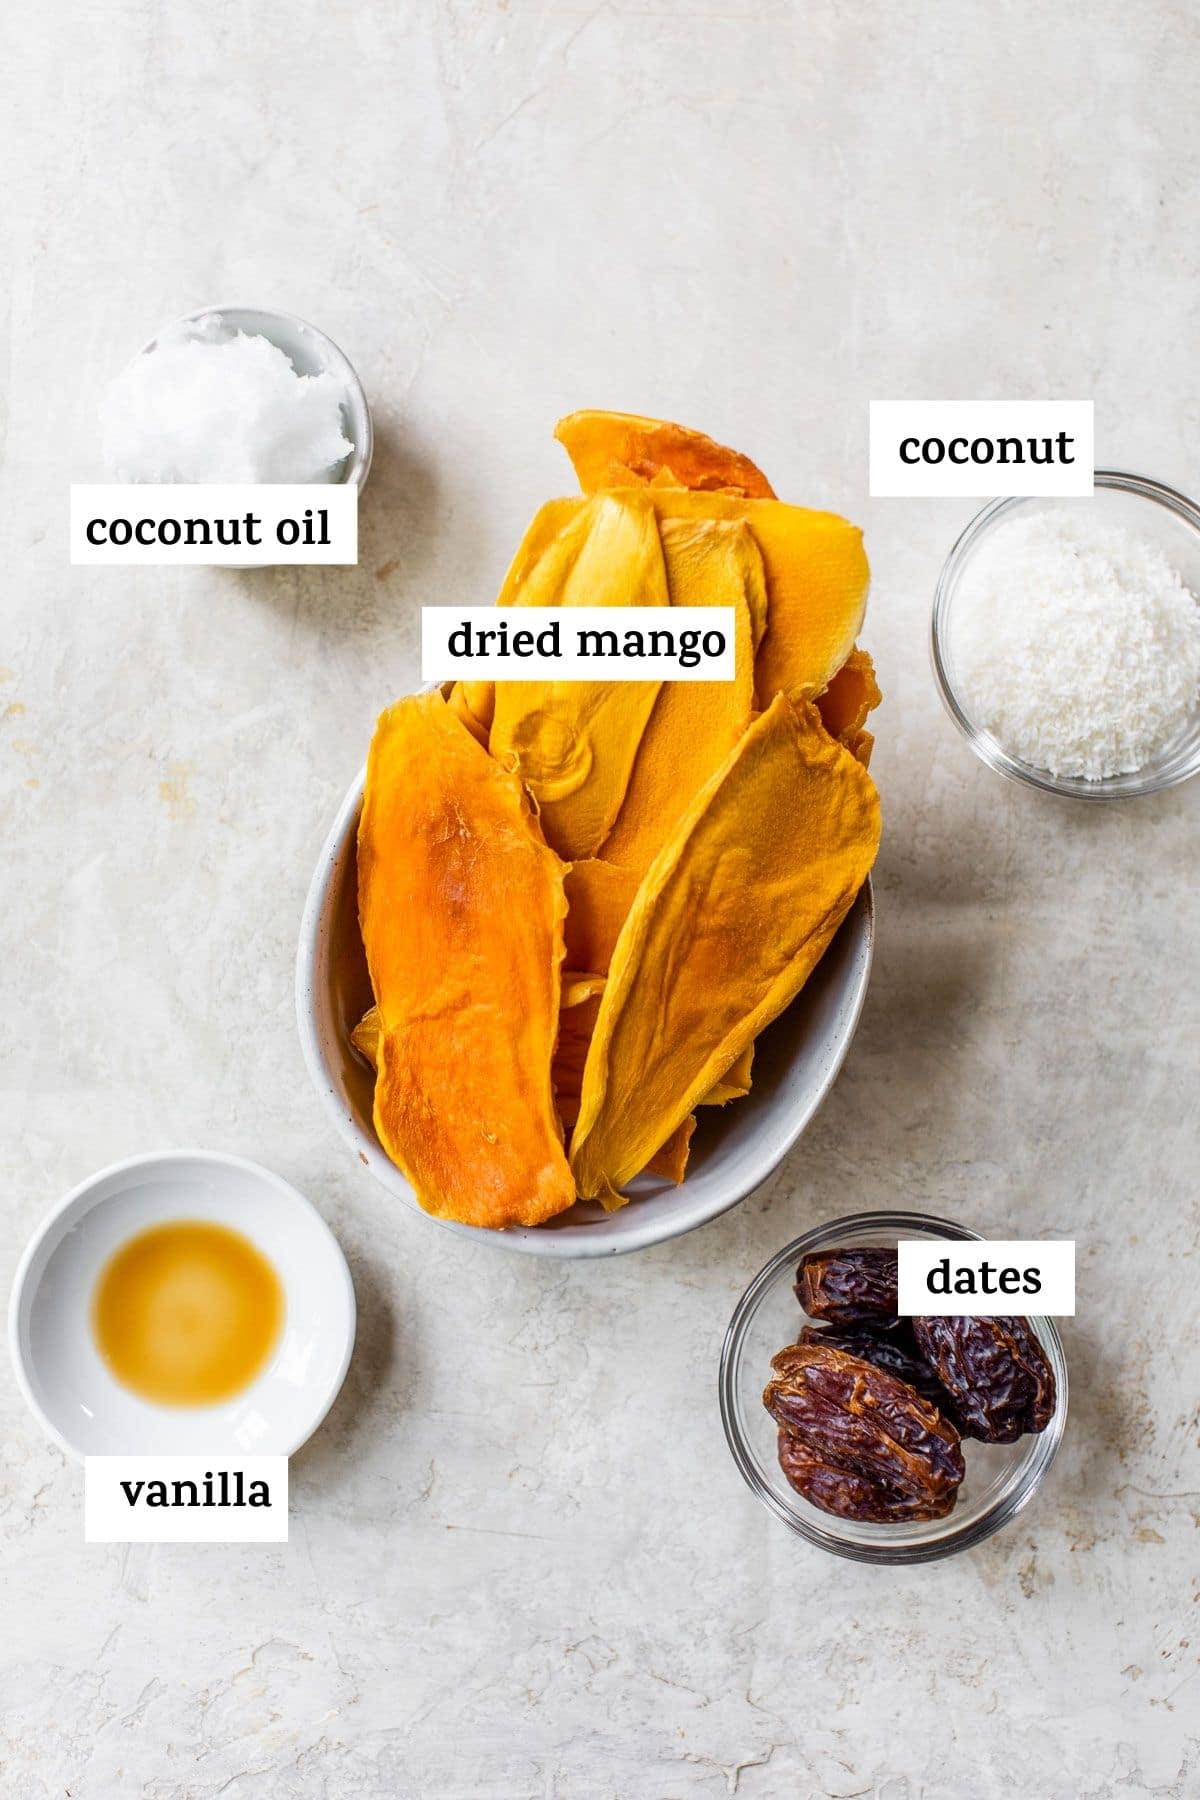 ingredients to make mango balls like dried mango and coconut